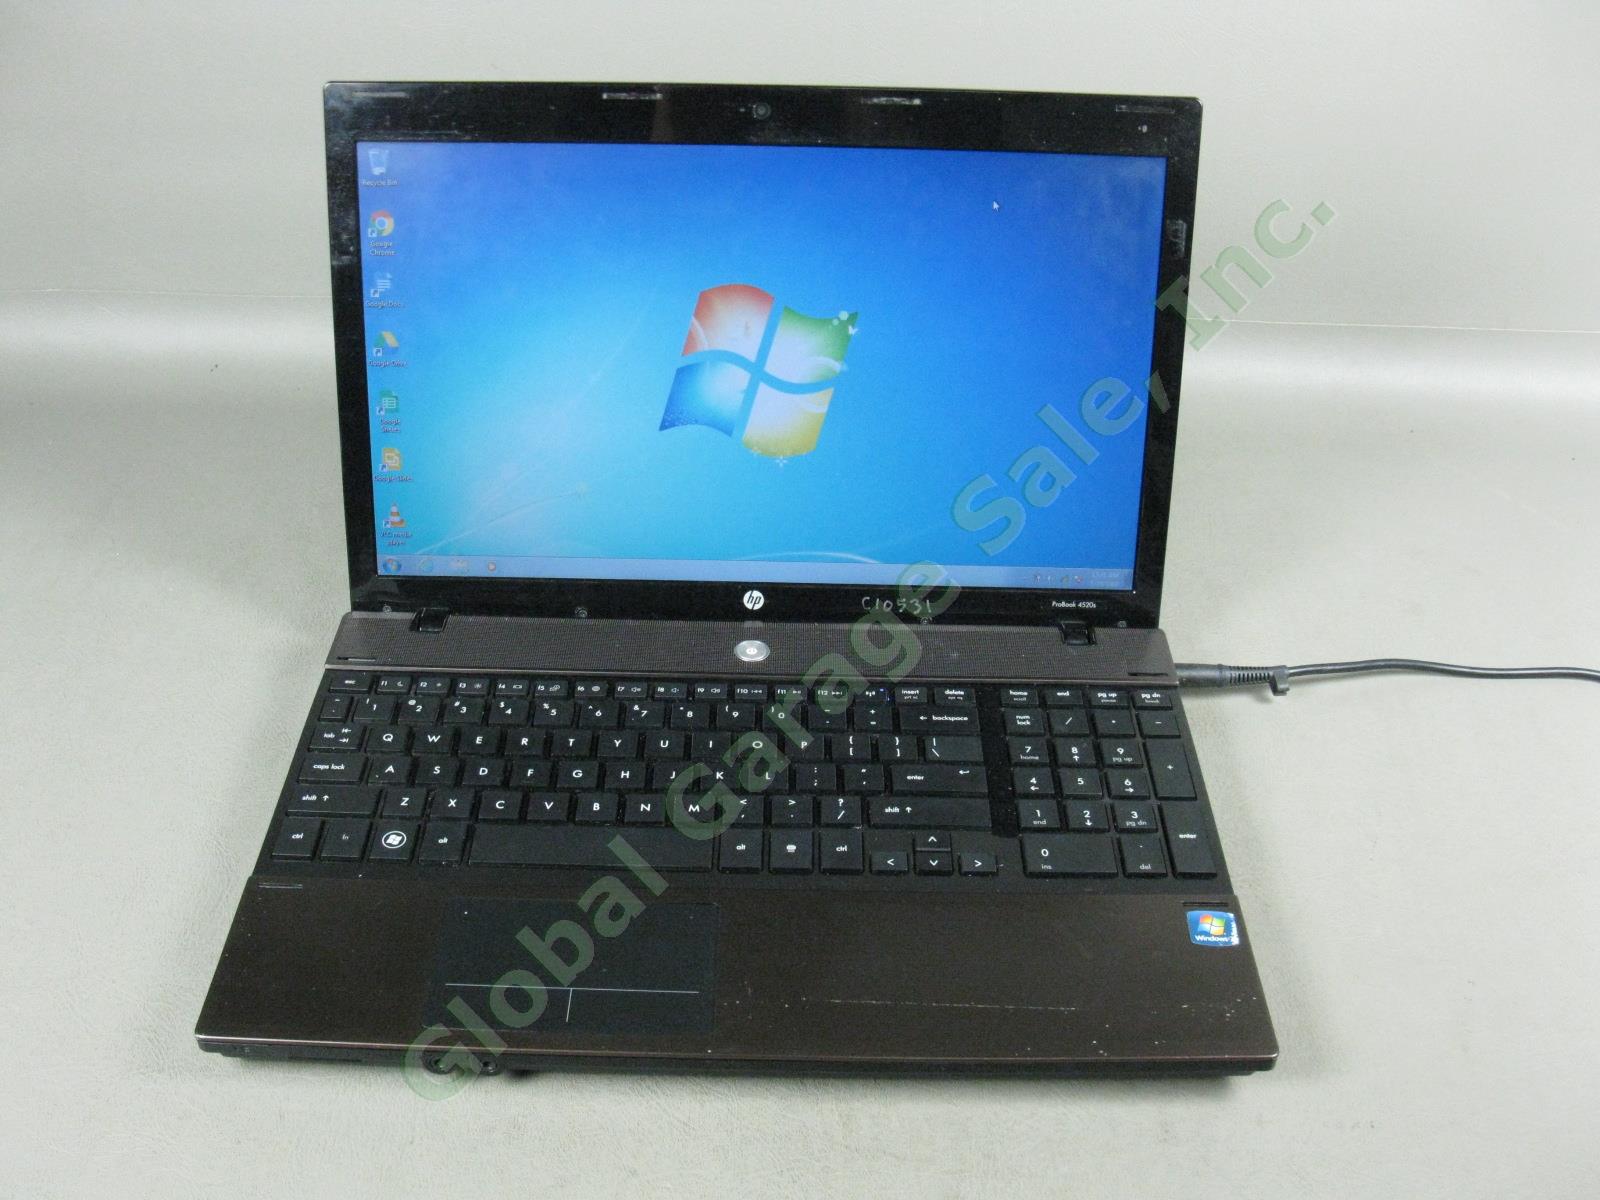 HP 4520s Laptop Computer Intel Core i5 M560 2.67GHz 2GB 500GB HDD Windows 7 Pro